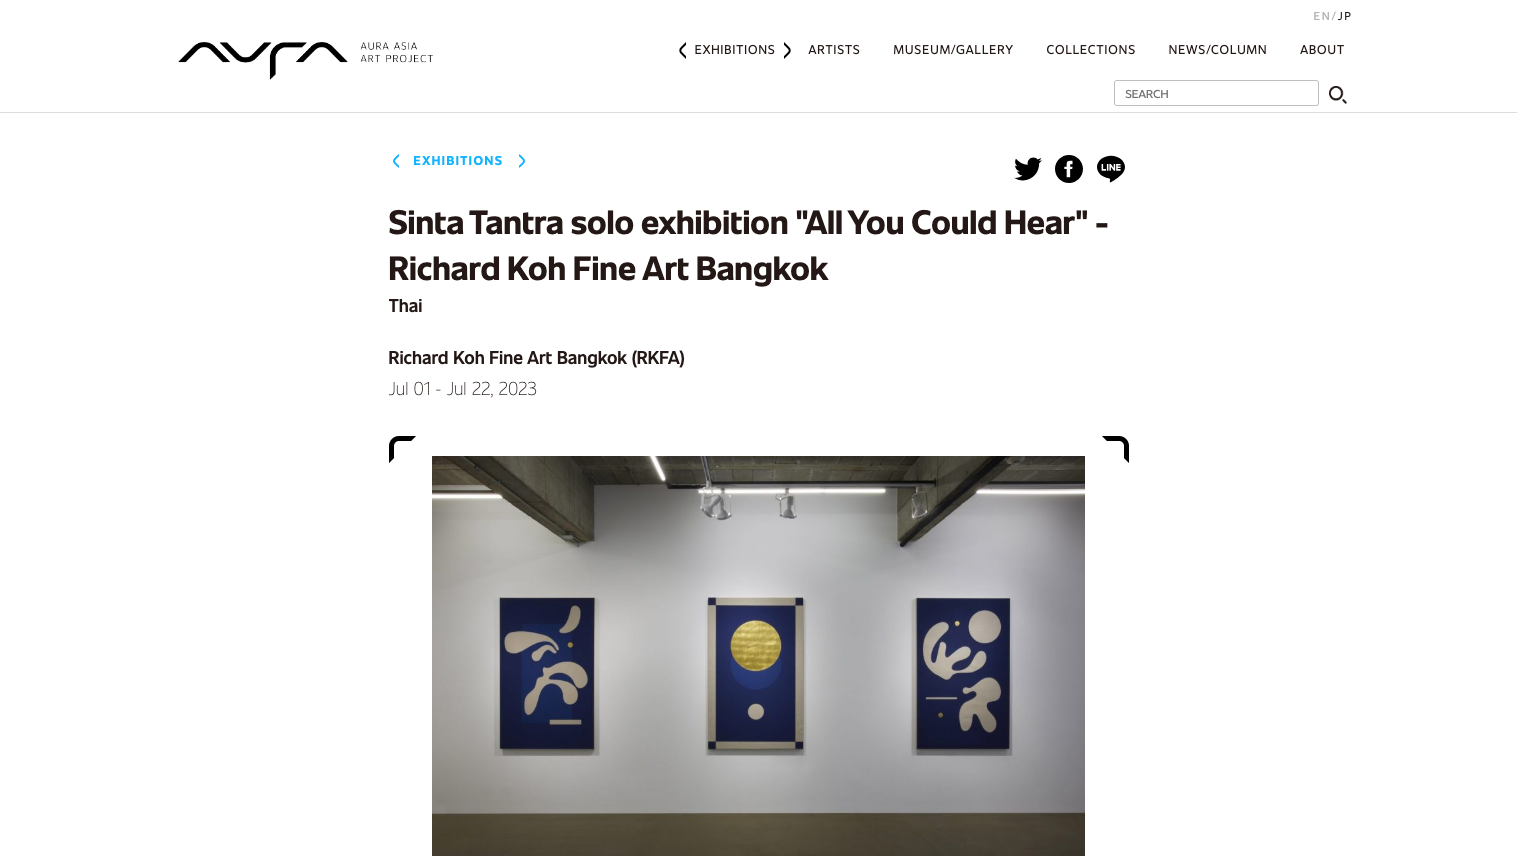 AURA ASIA ART PROJECT – Sinta Tantra Solo Exhibition “All You Could Hear”: Richard Koh Fine Art Bangkok